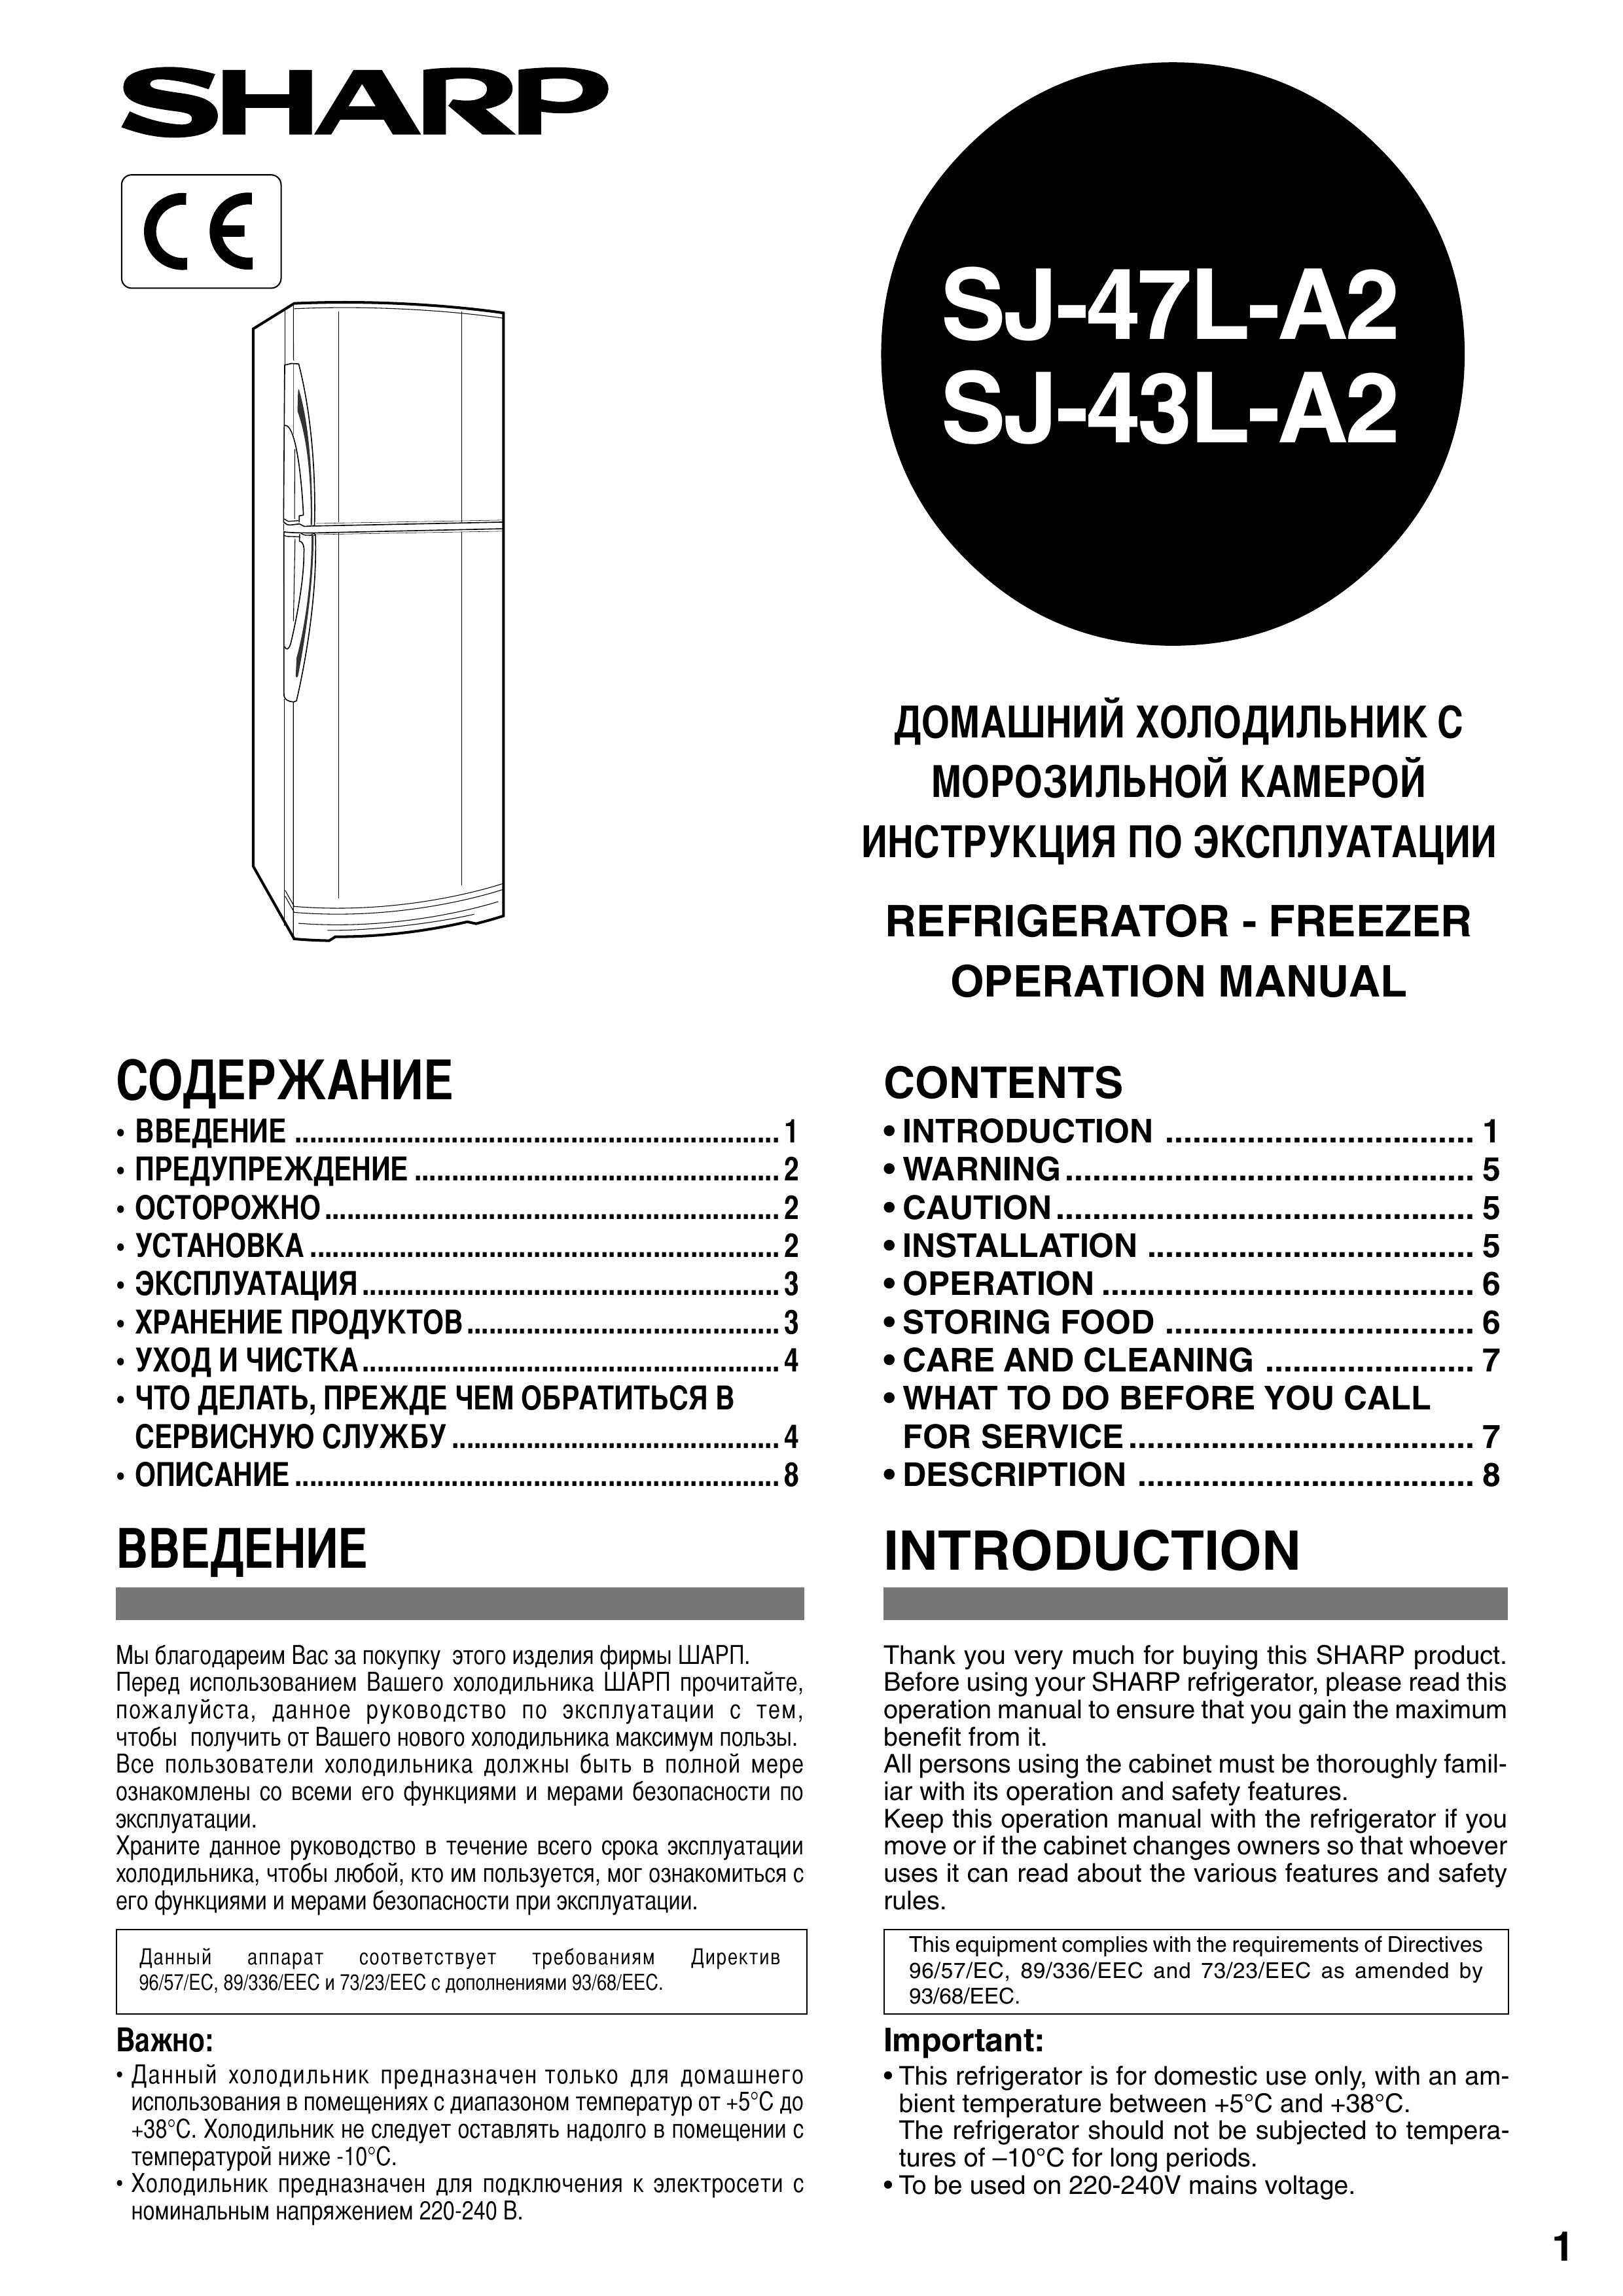 Sharp SJ-47L-A2 Refrigerator User Manual